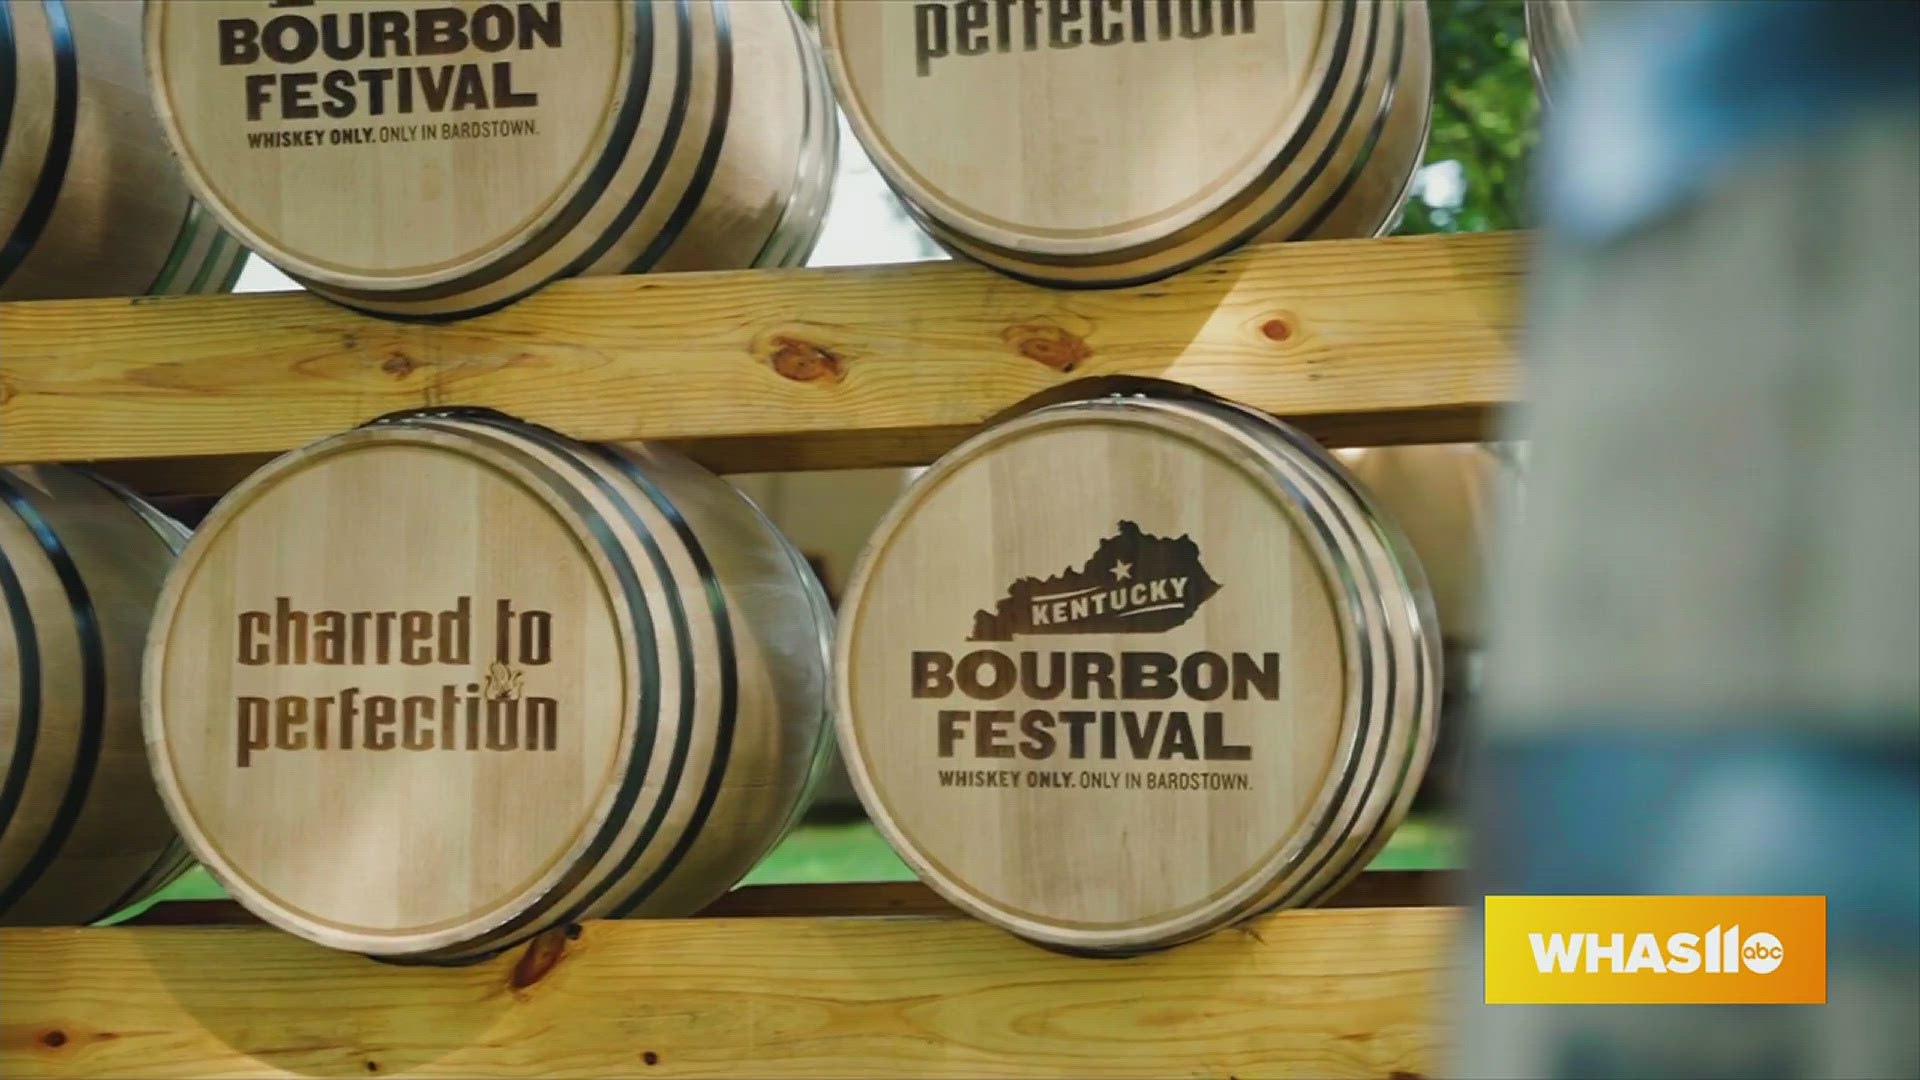 This year's Kentucky Bourbon Festival will be on September, 13-15.